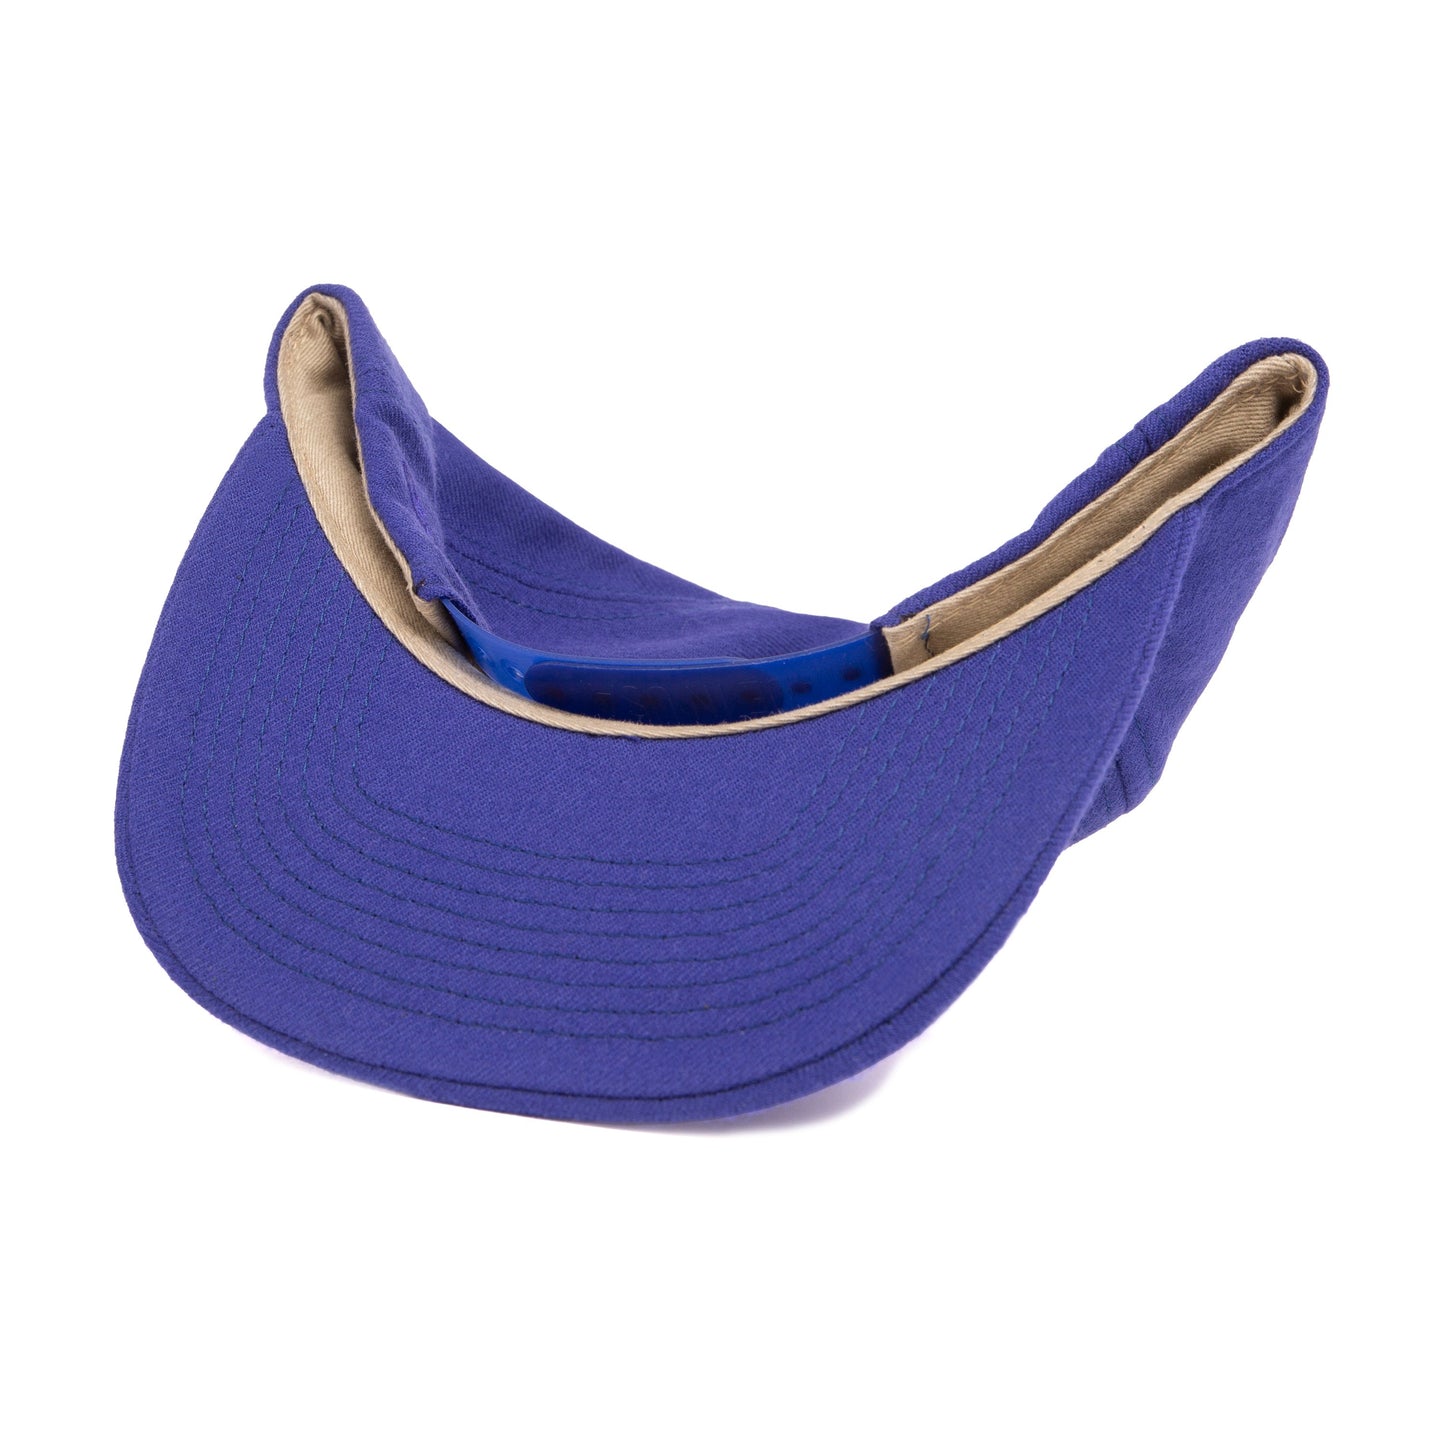 Brentwood Dodgers Snapback Hat